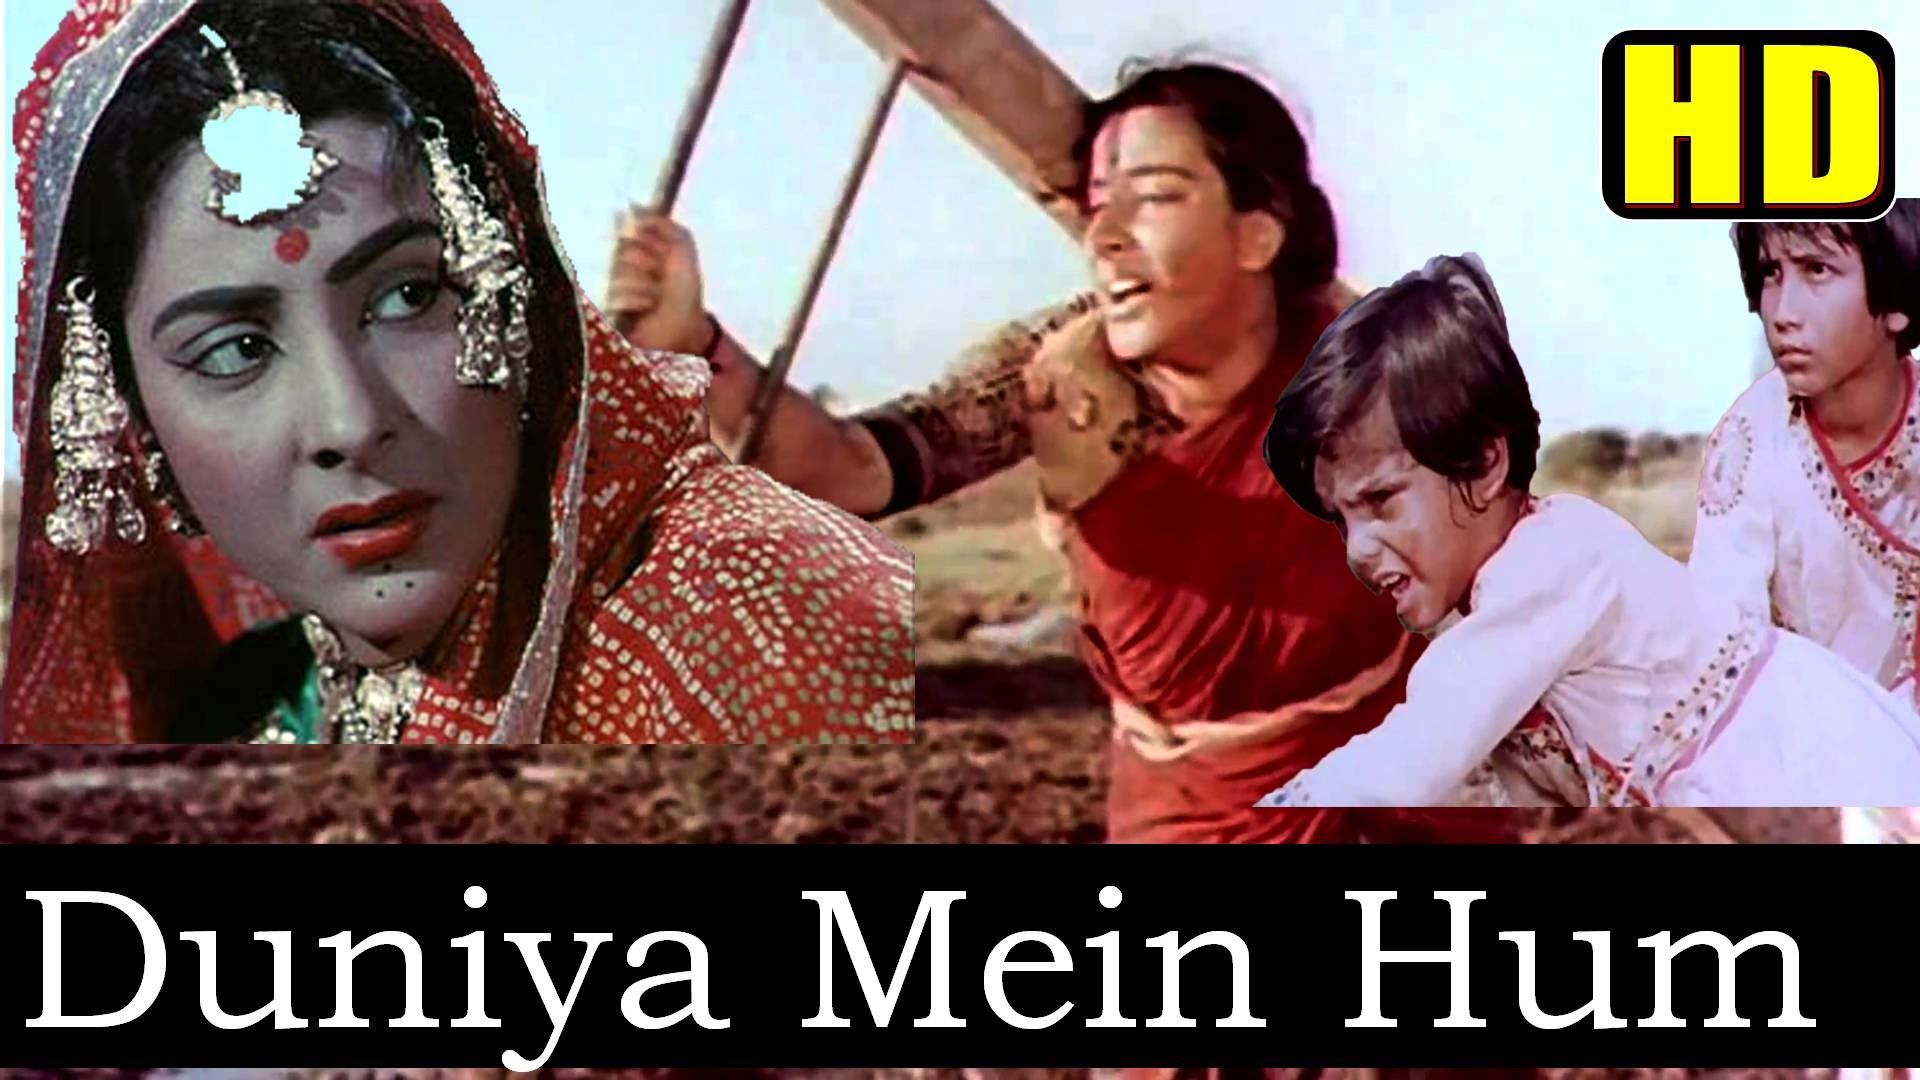 Cinema Indiano - Mother India